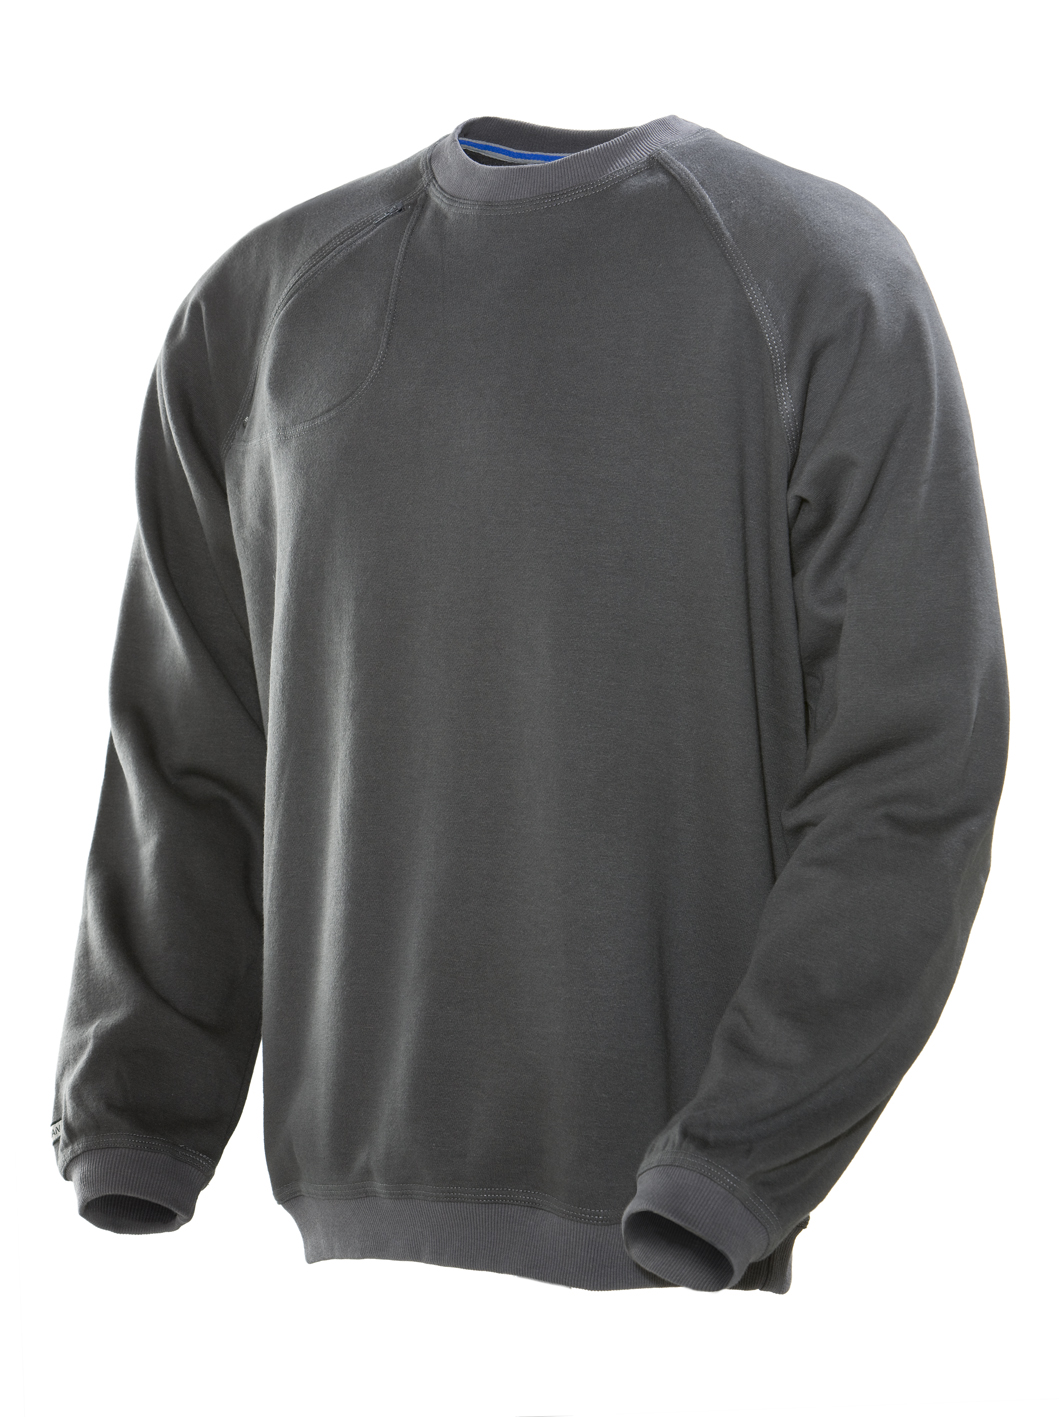 5122 Sweatshirt L gris antracite